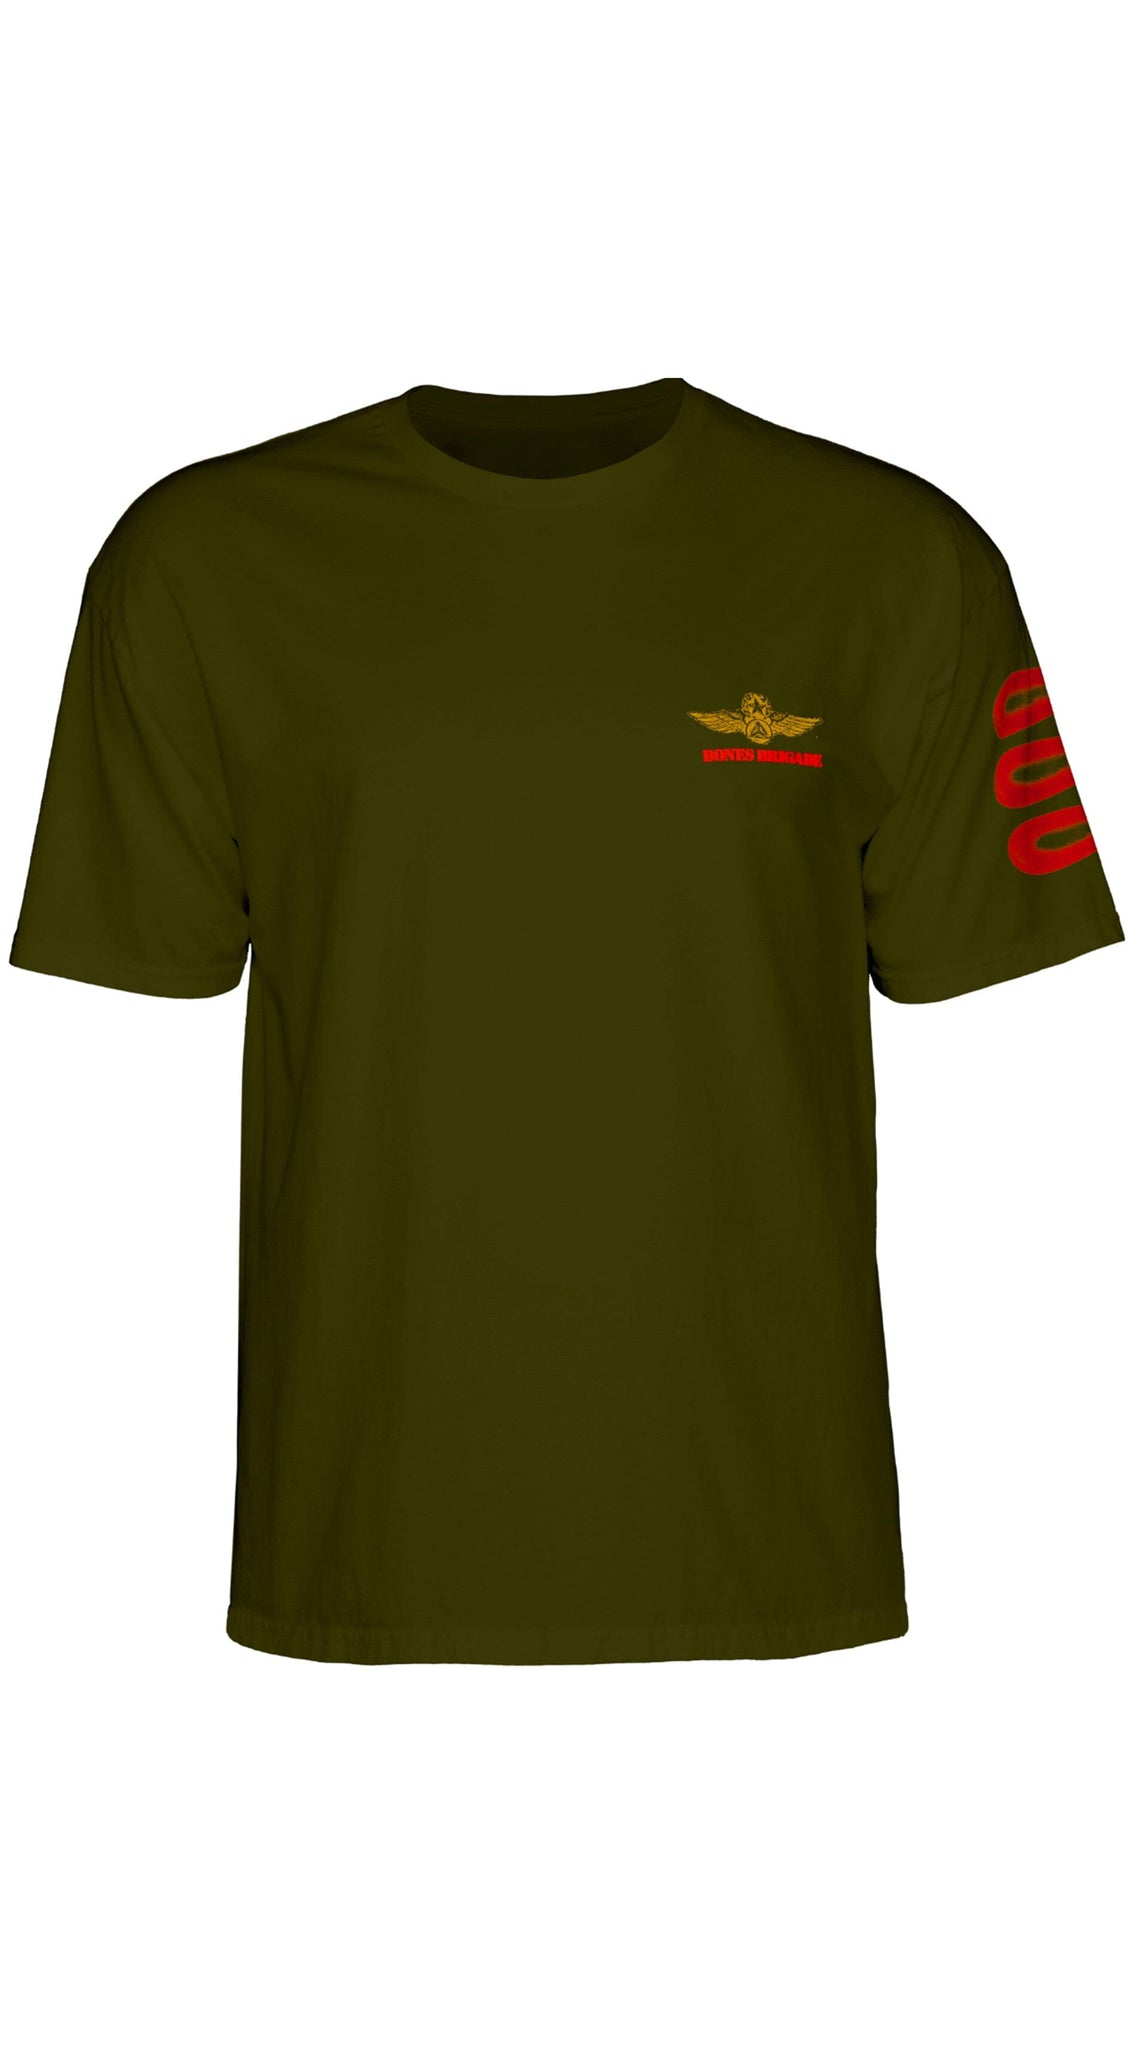 Powell Peralta Bones Brigade Bomber Army Green T-shirt PREORDER - Camiseta Ropa Powell Peralta 